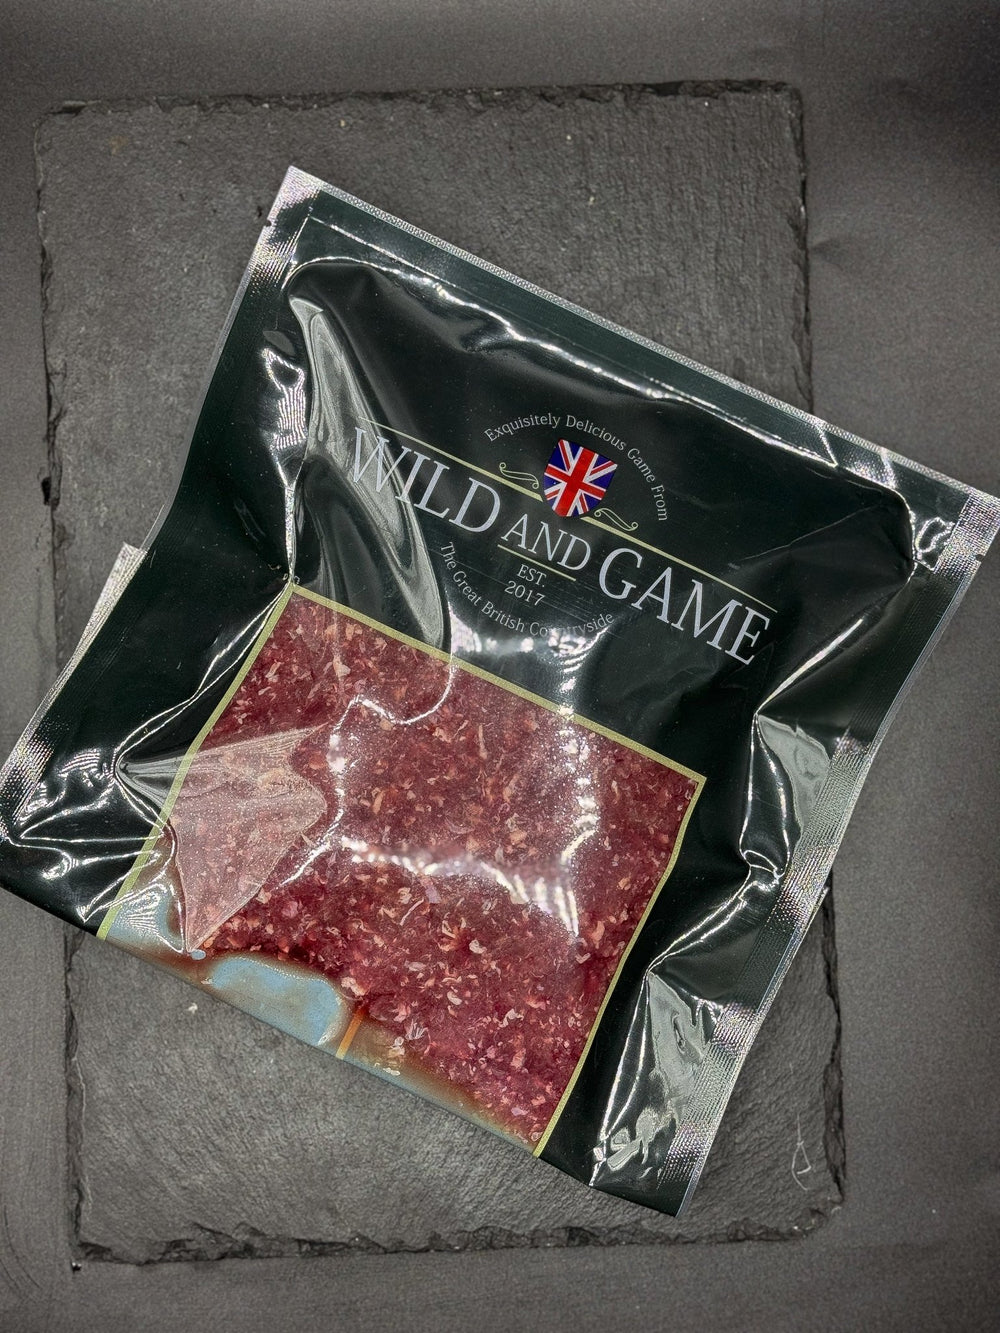 Venison Mince 400g pack - Wild Game Meat Ltd